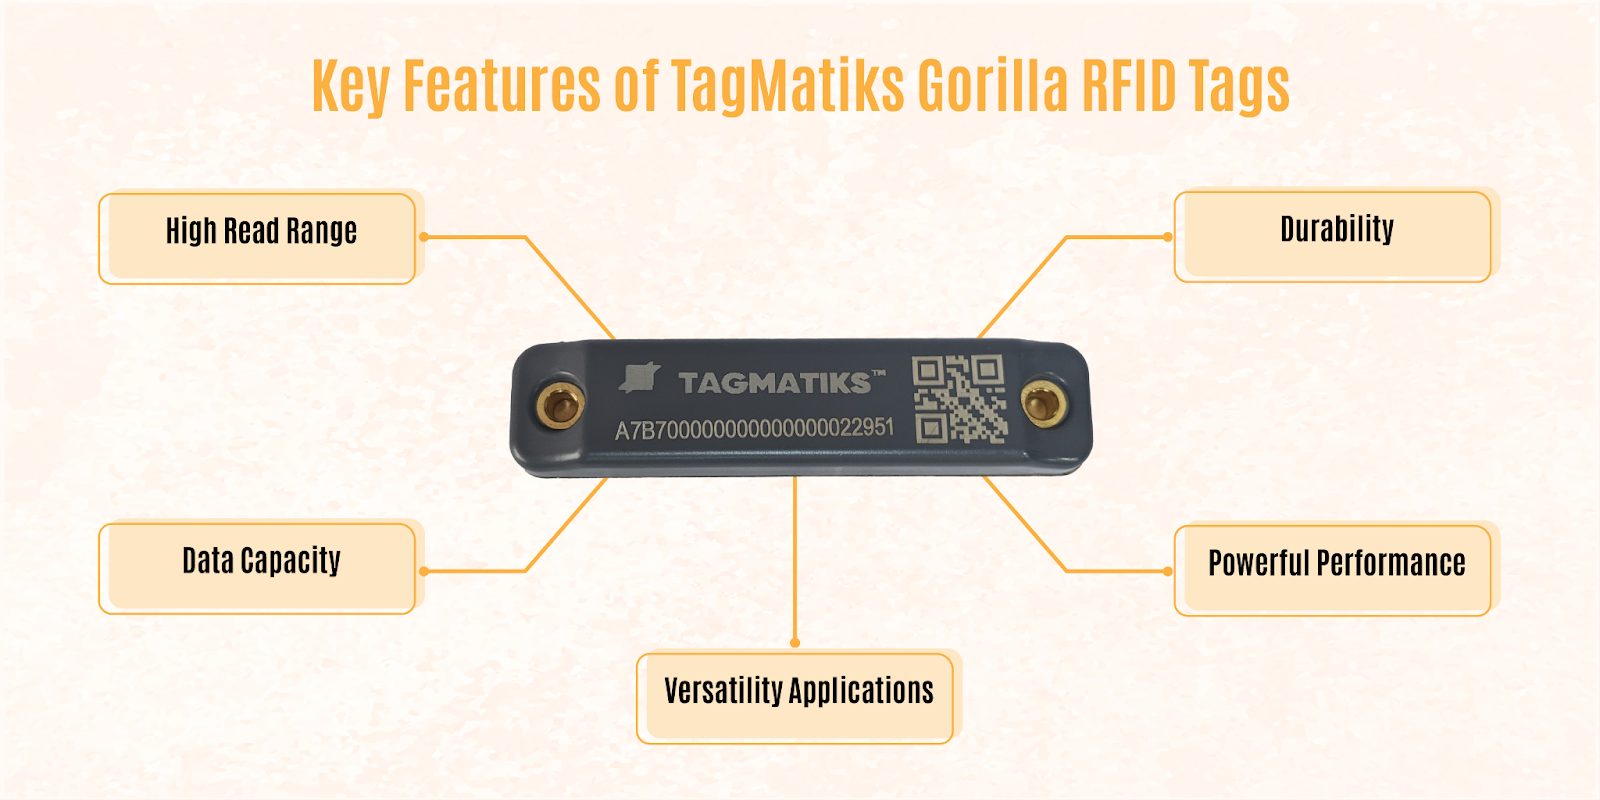 Key Features of TagMatiks Gorilla RFID Tags